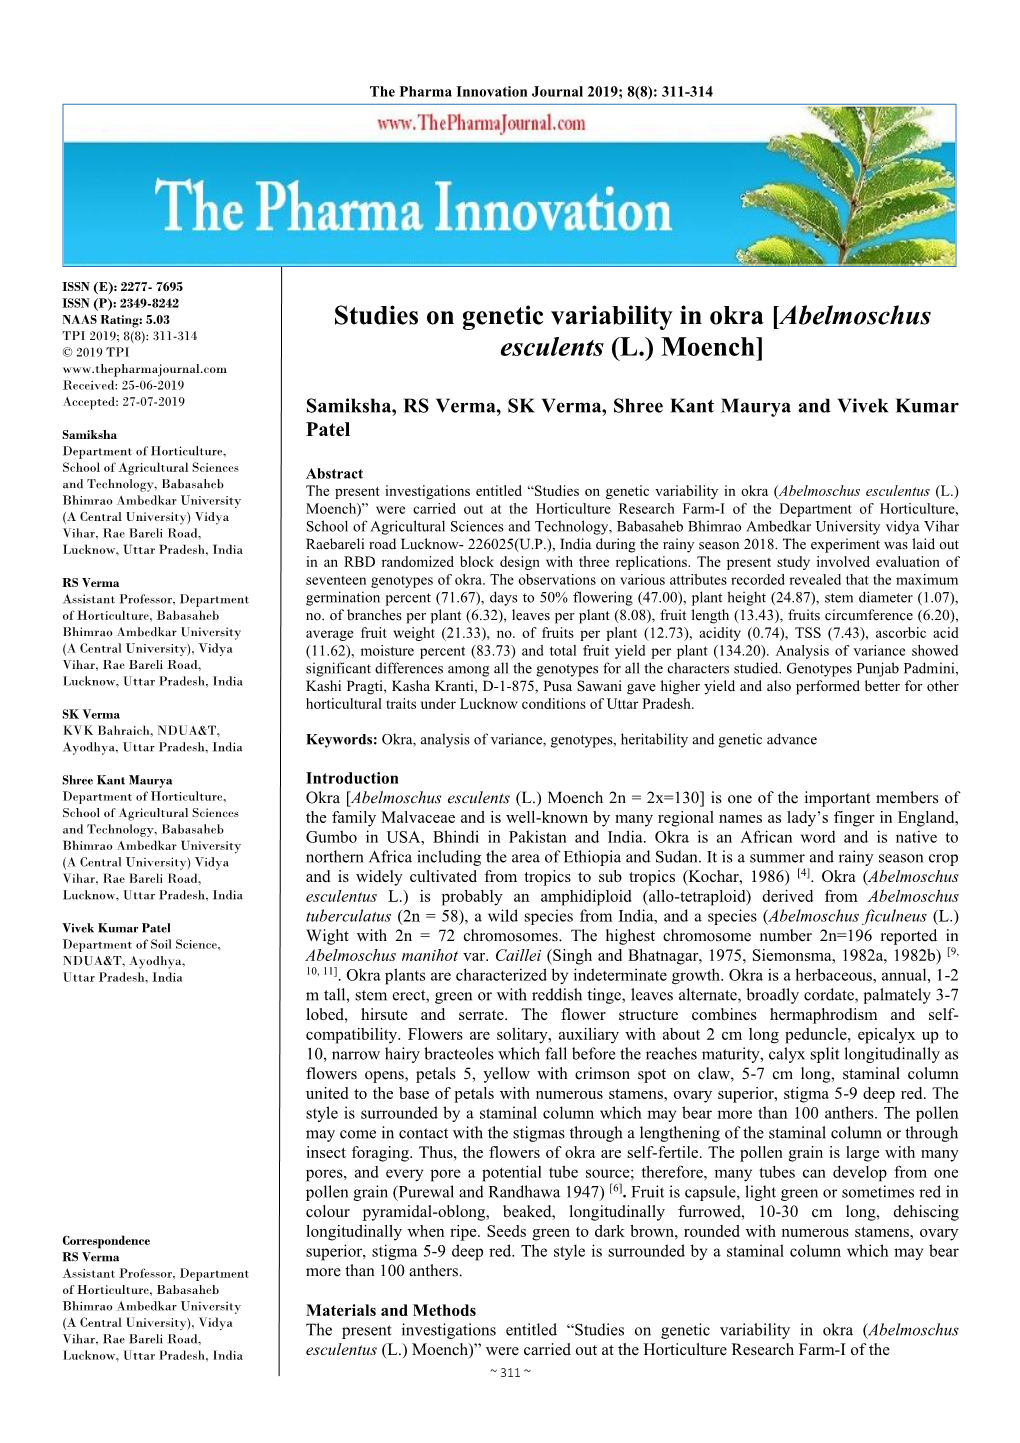 Studies on Genetic Variability in Okra [Abelmoschus Esculents (L.) Moench]